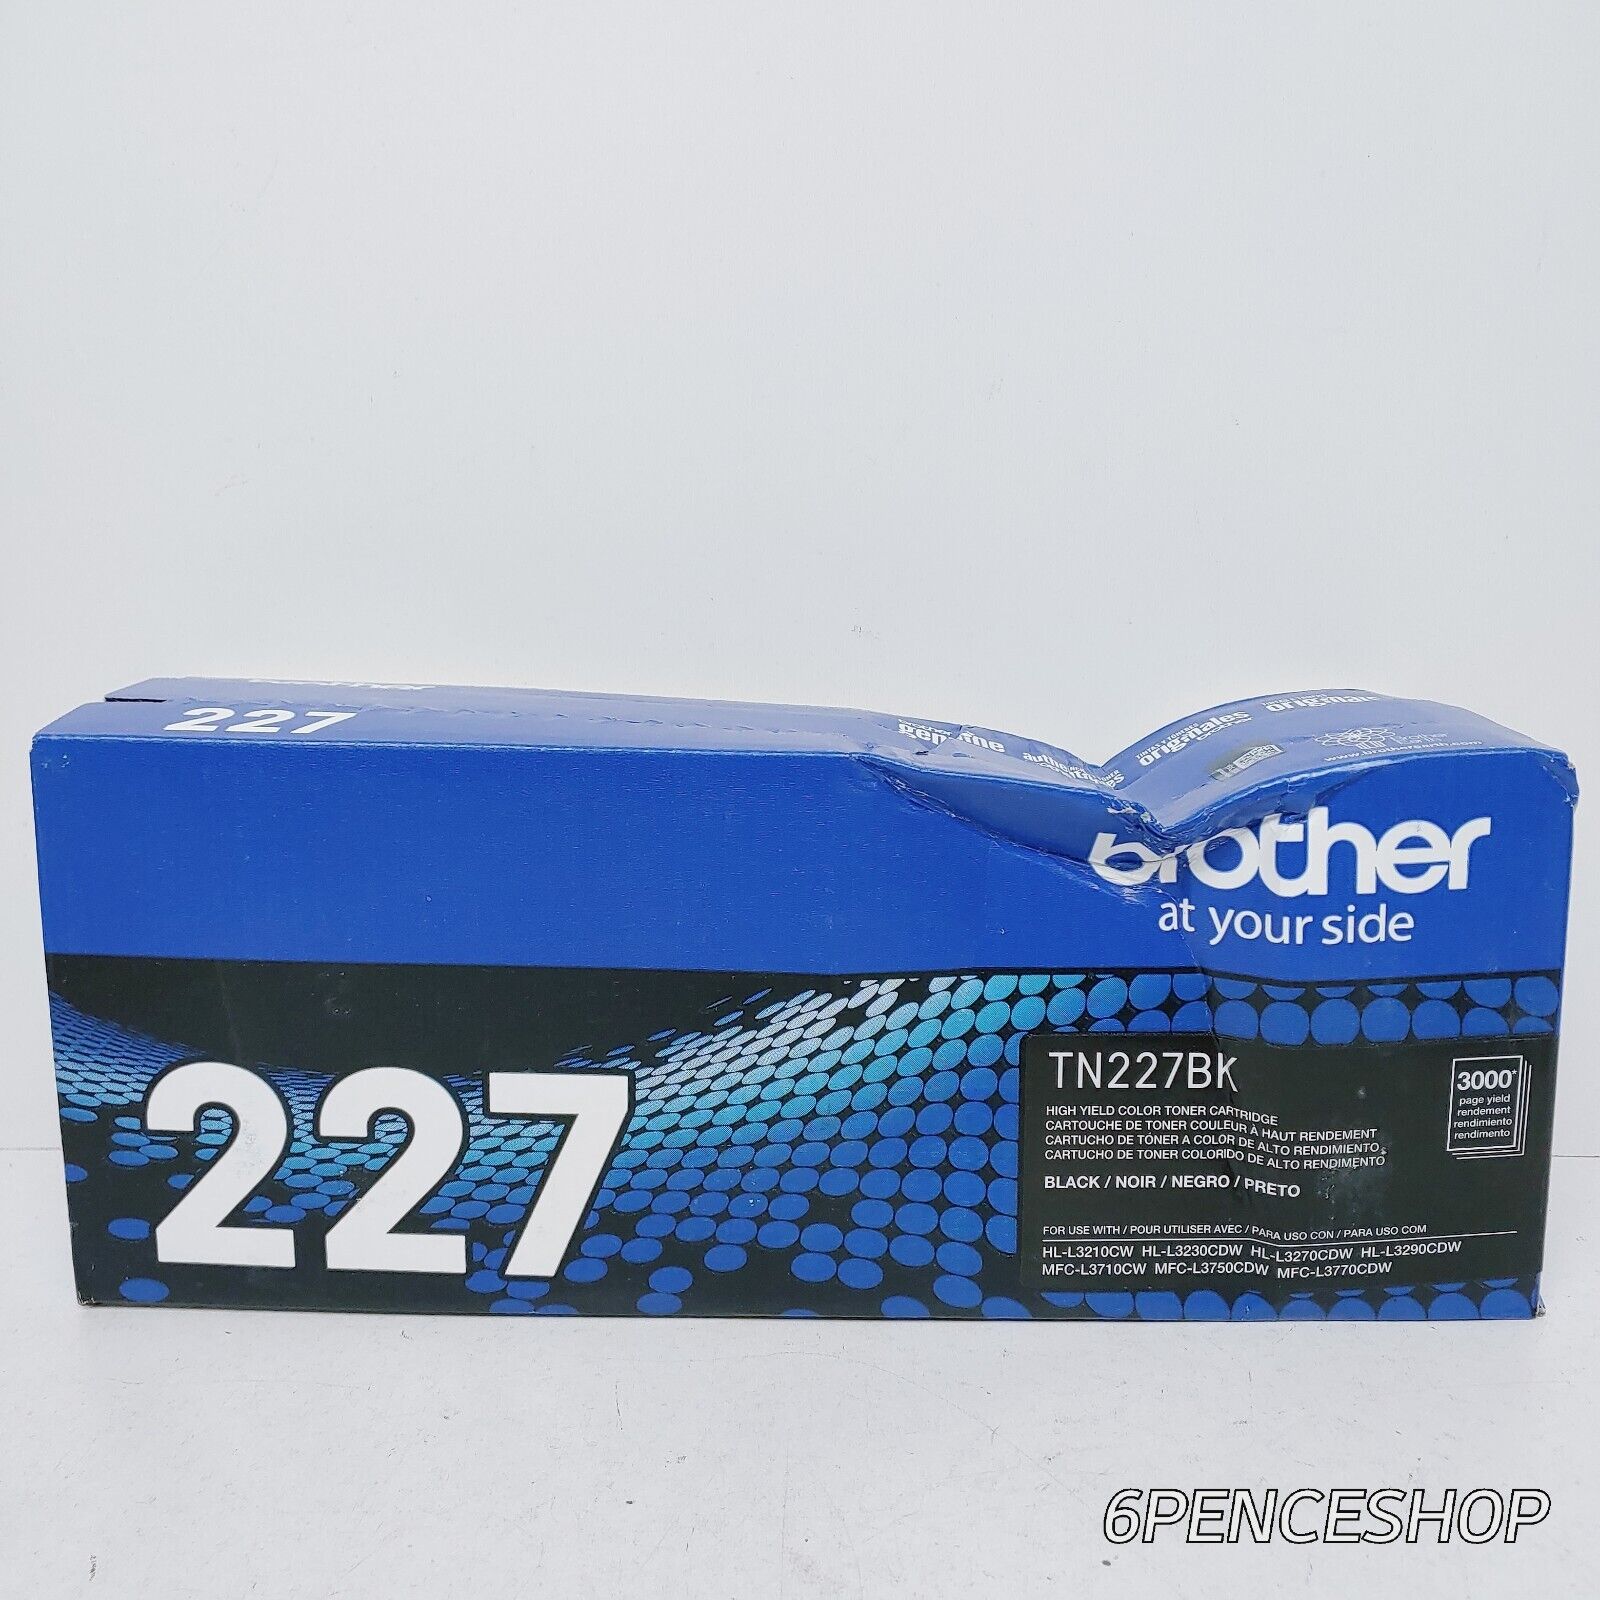 *New Deformed Box* Brother TN-227 Black Toner Cartridge TN227BK